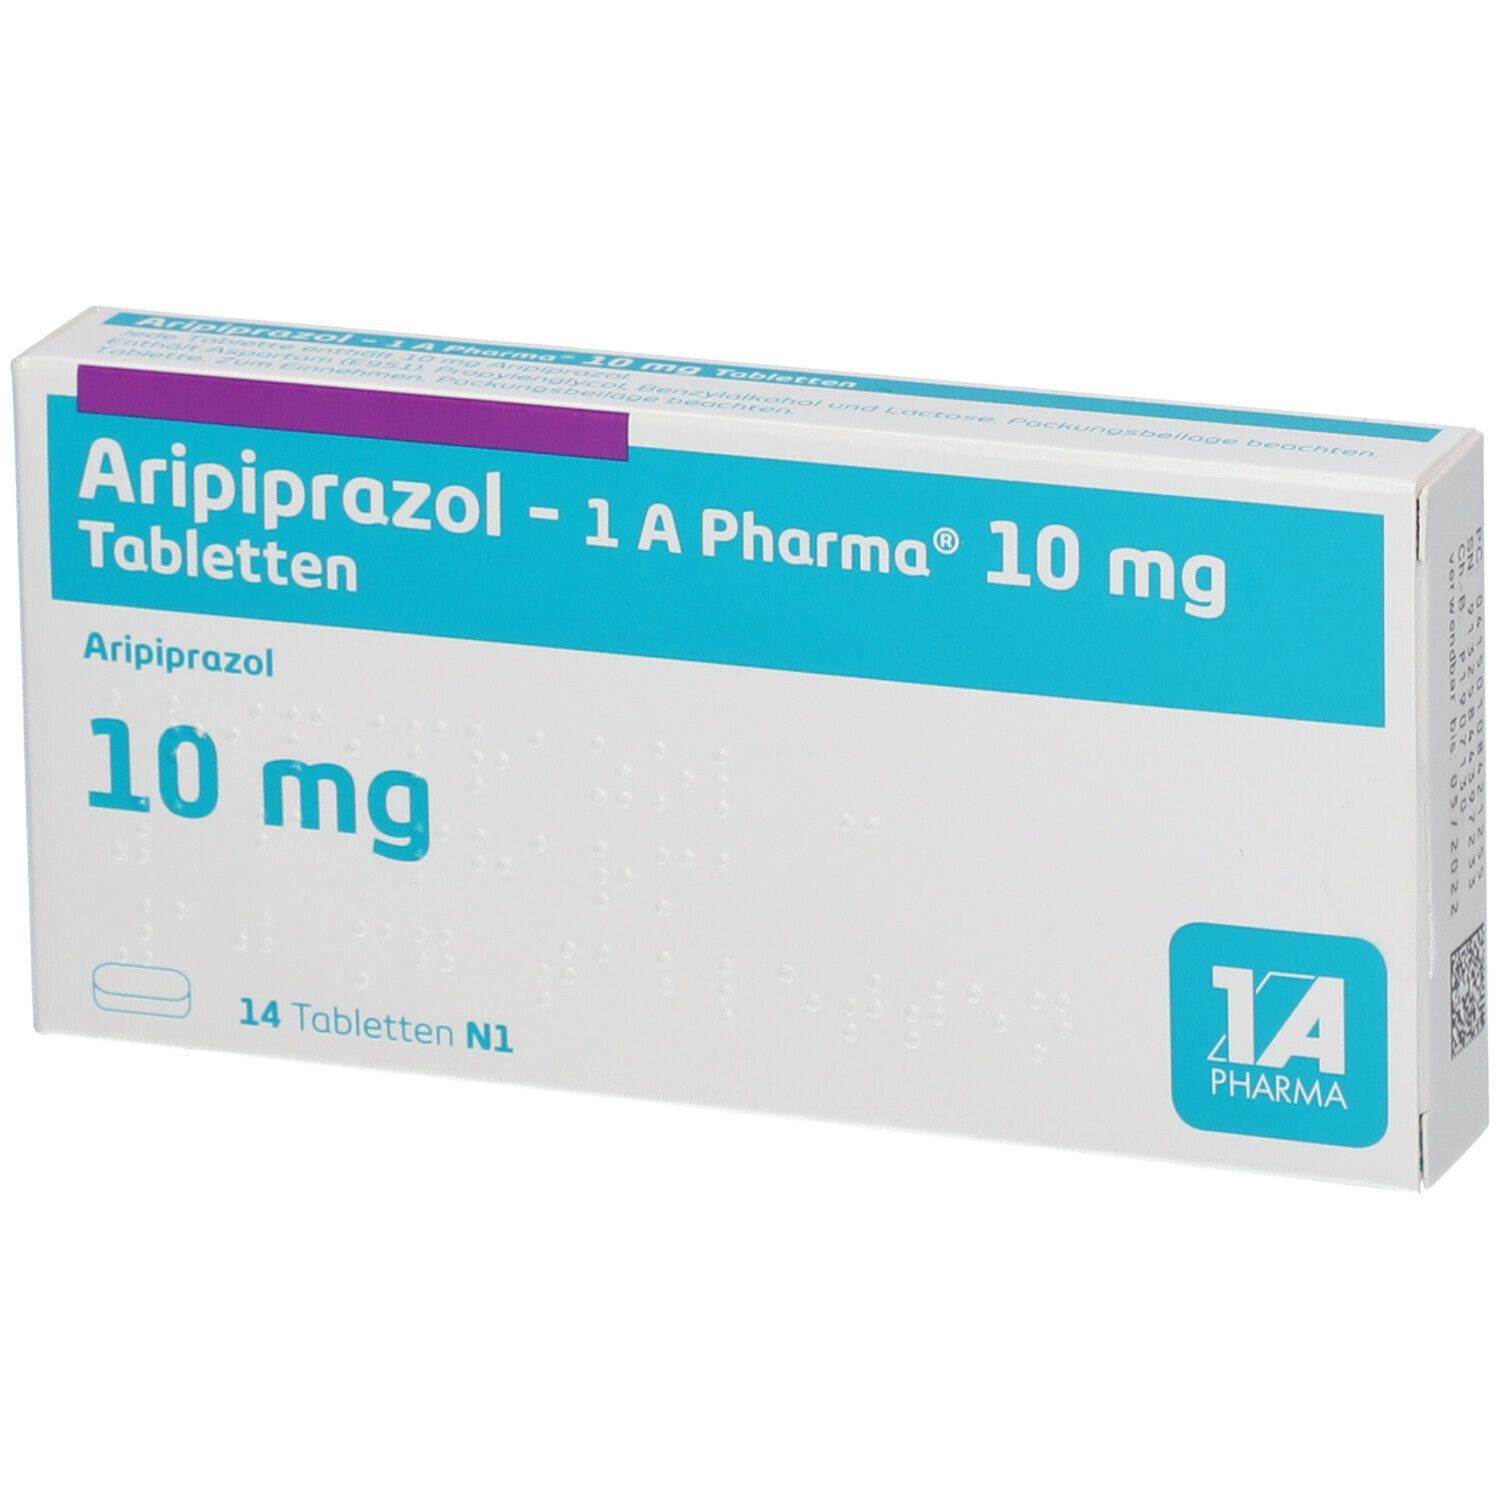 Aripiprazol - 1 A Pharma® 10 mg